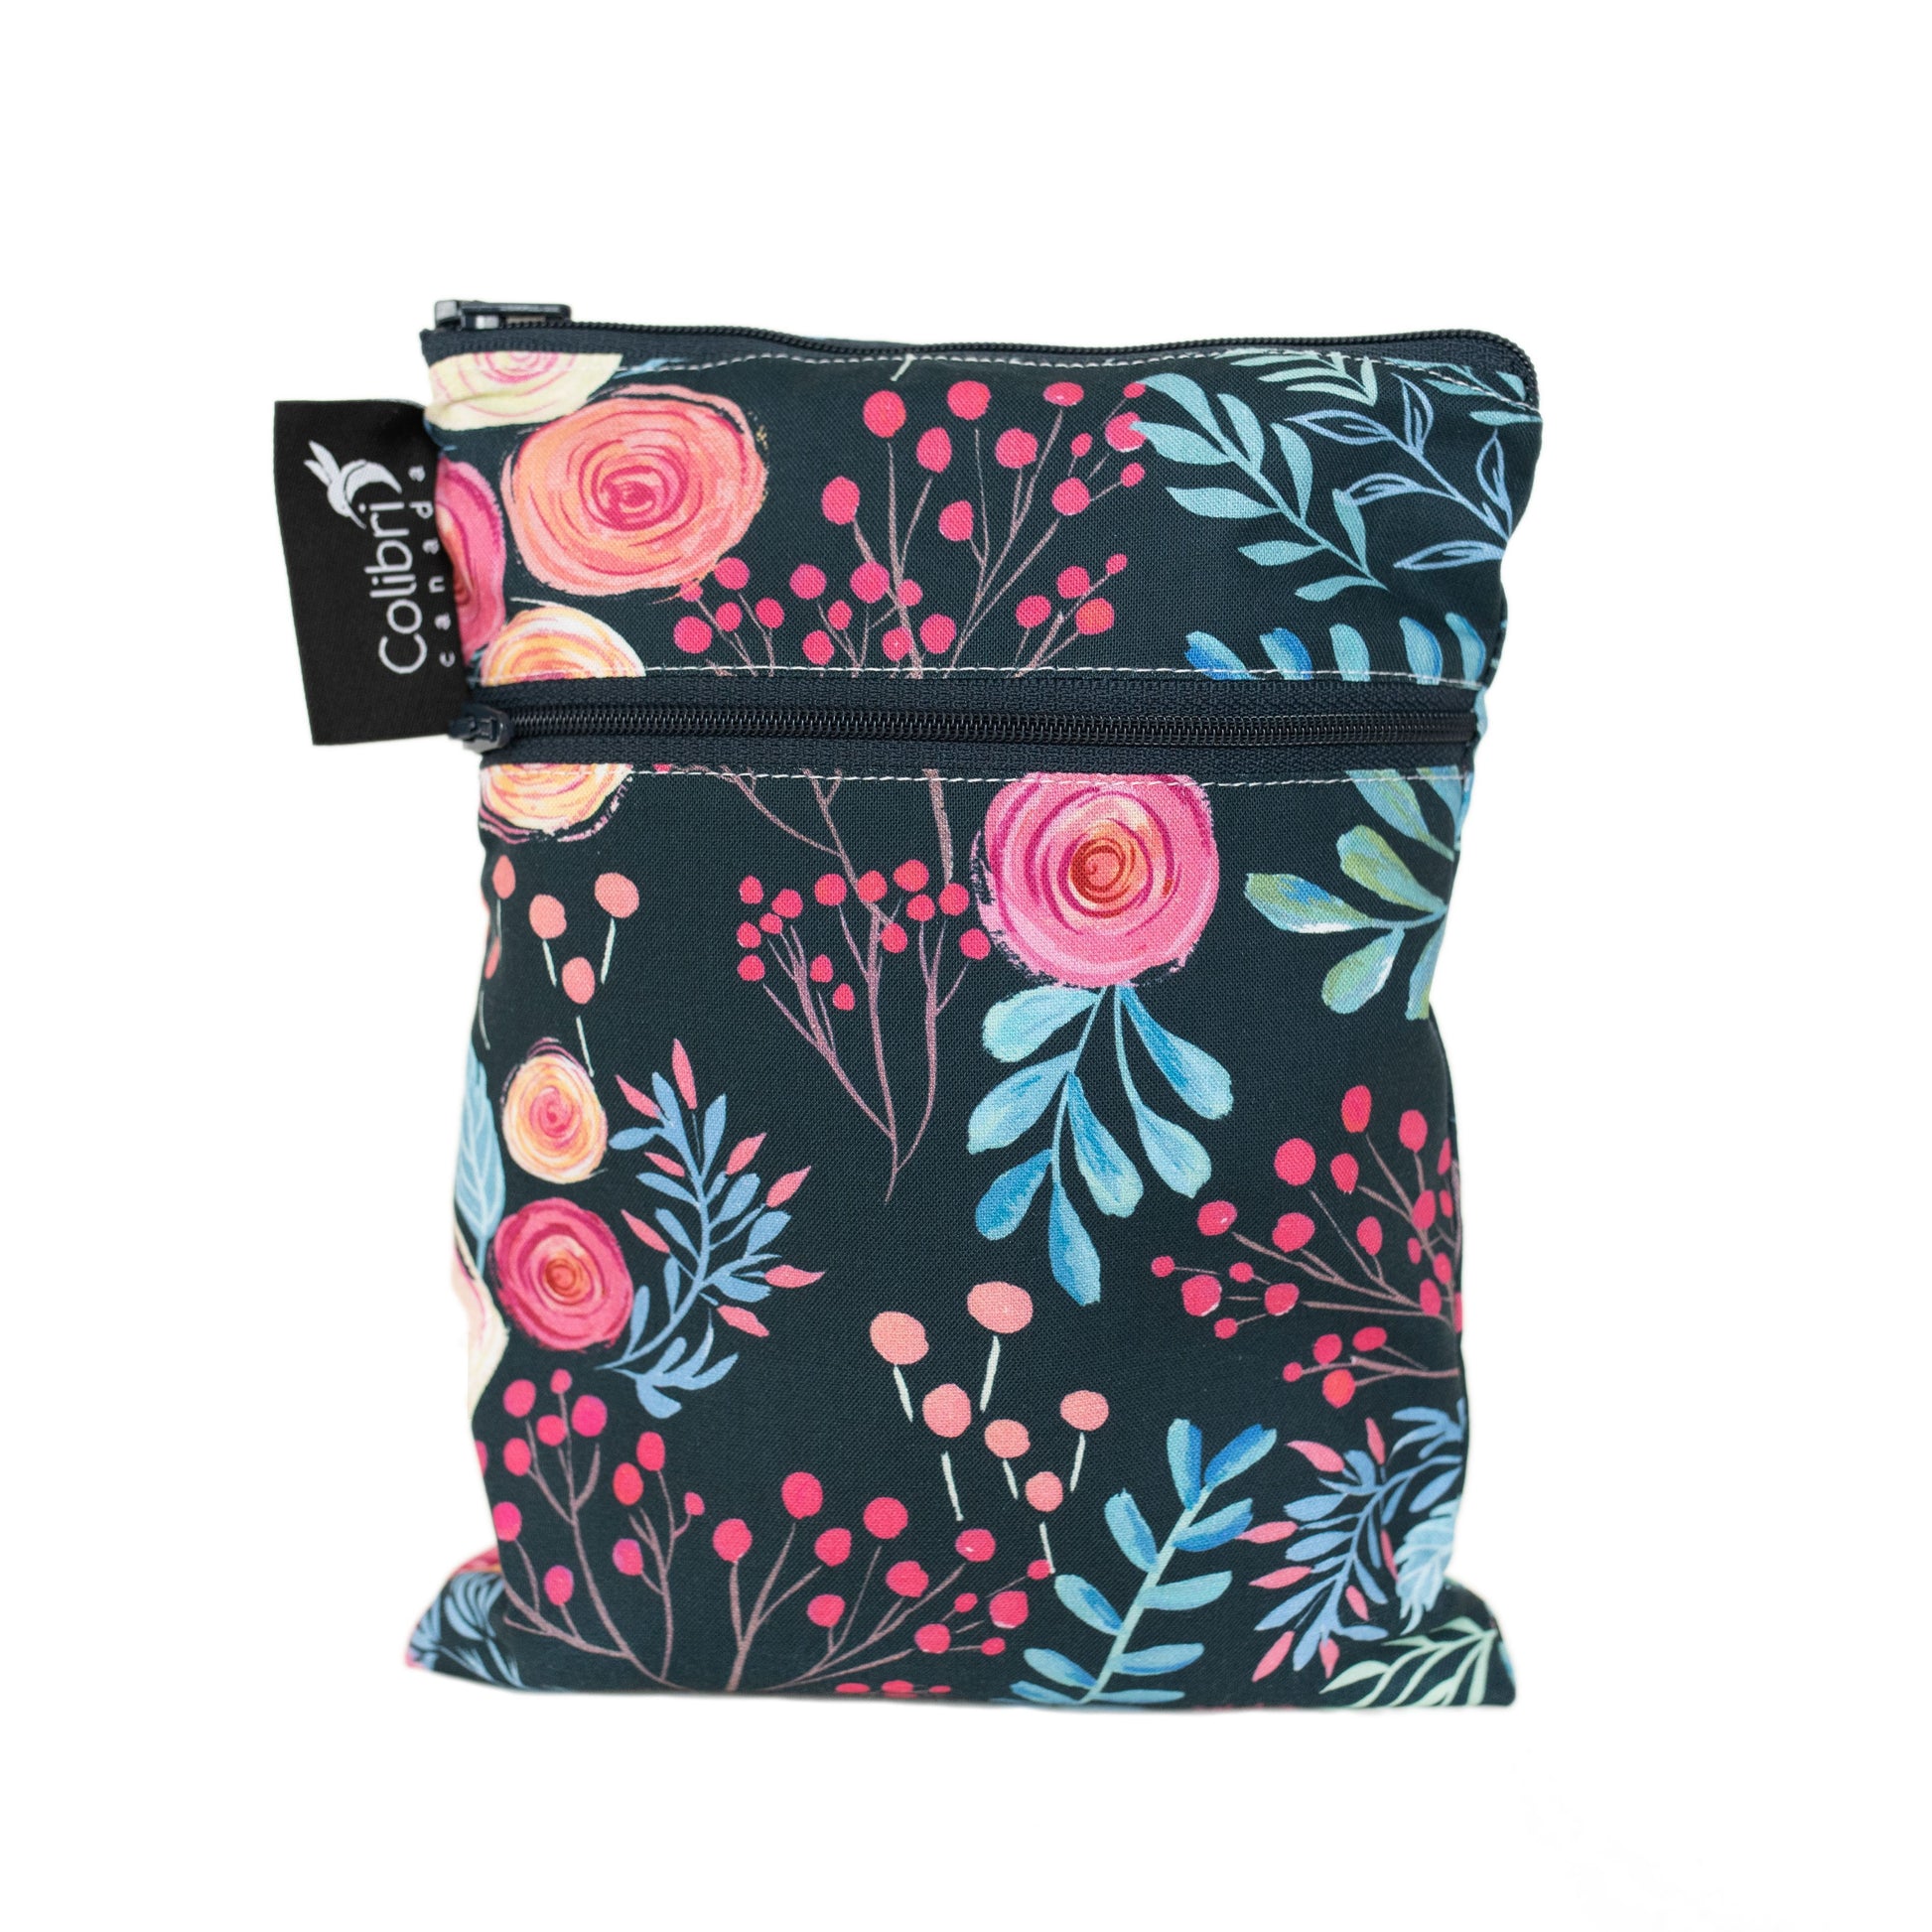 Purse Wetbags - Colibri Roses Dual Pocket Purse Sized Wet Bag